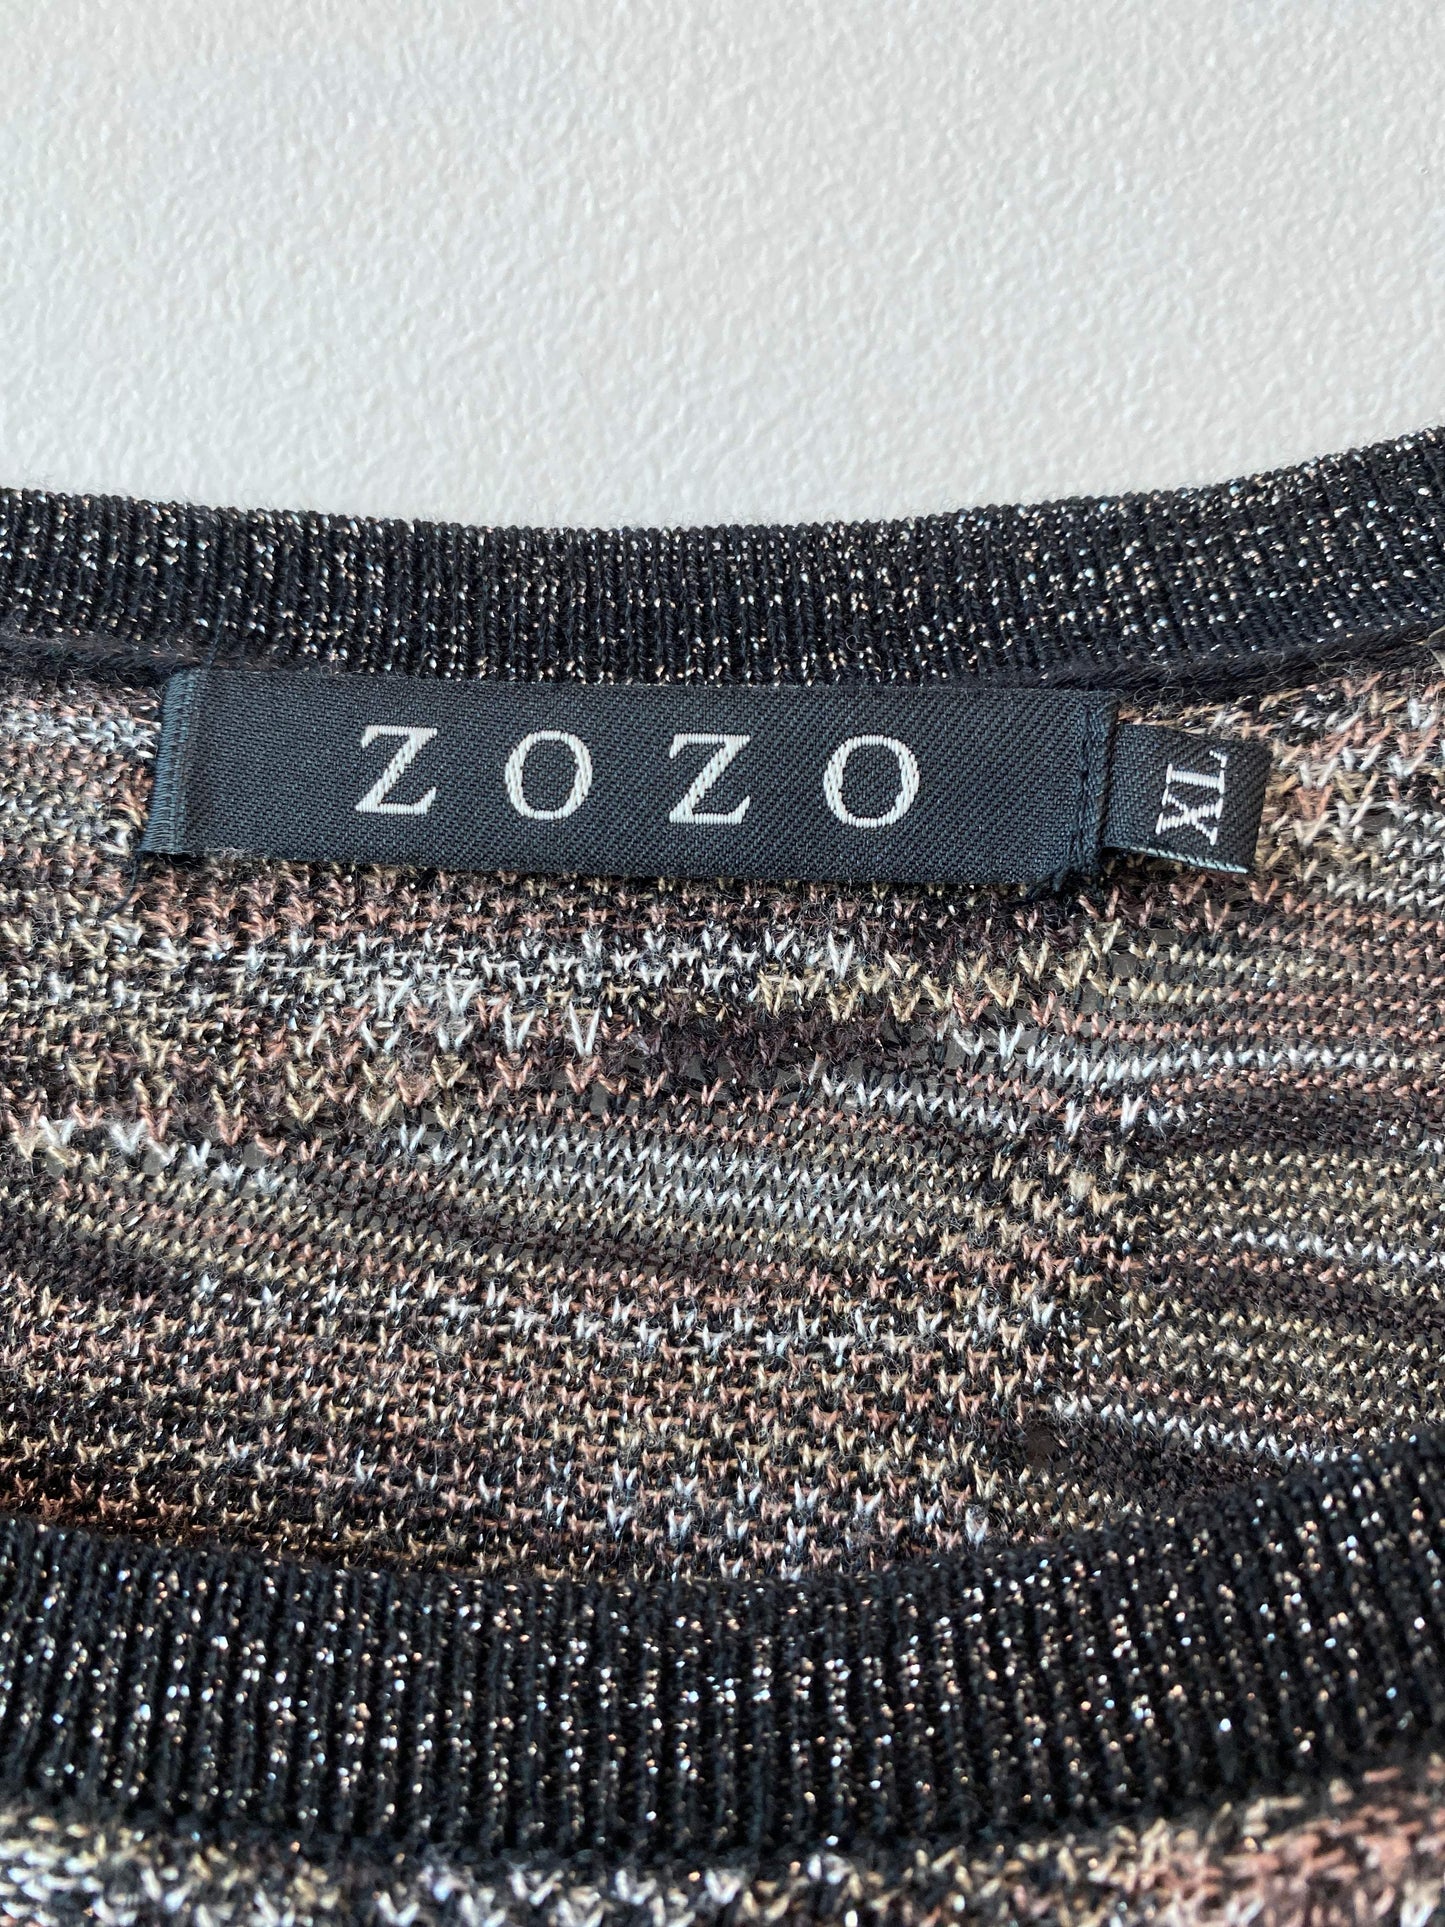 Zozo Black/Multi XL Rayon/Cotton Sweater NWT